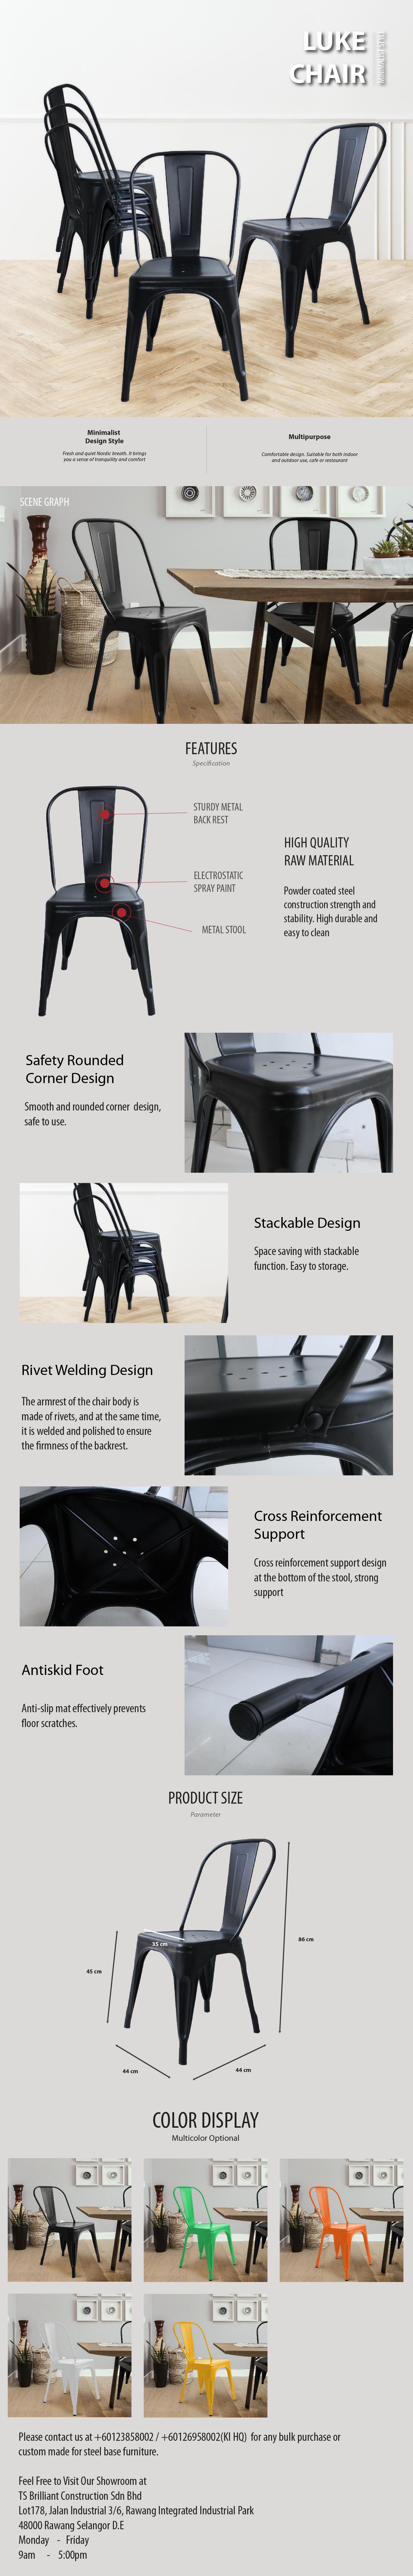 Description - luke chair-01